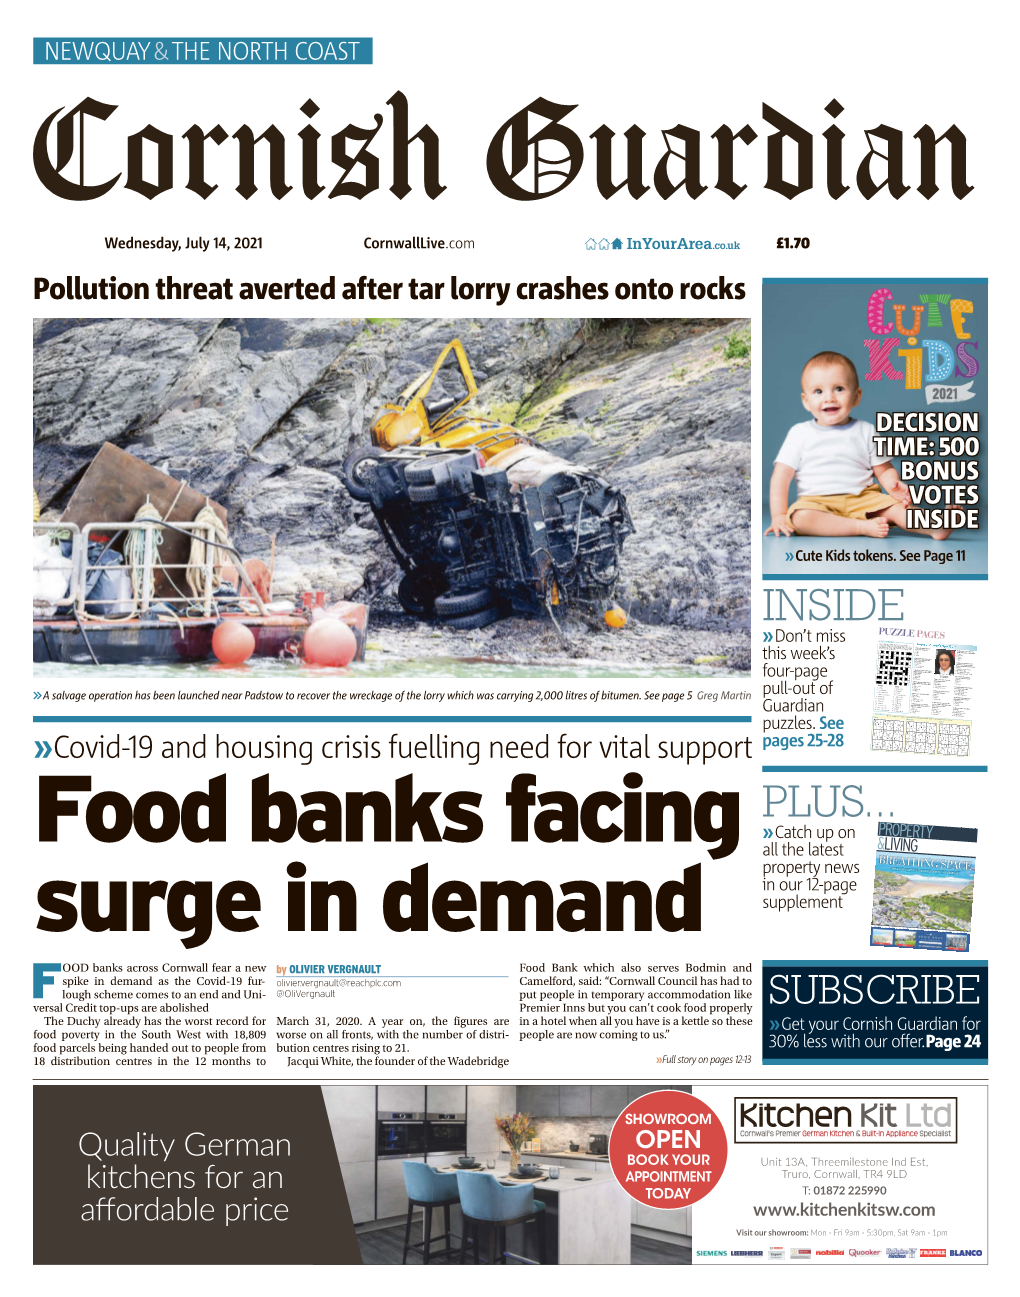 Cornish Guardian (Notice) 14.07.2021